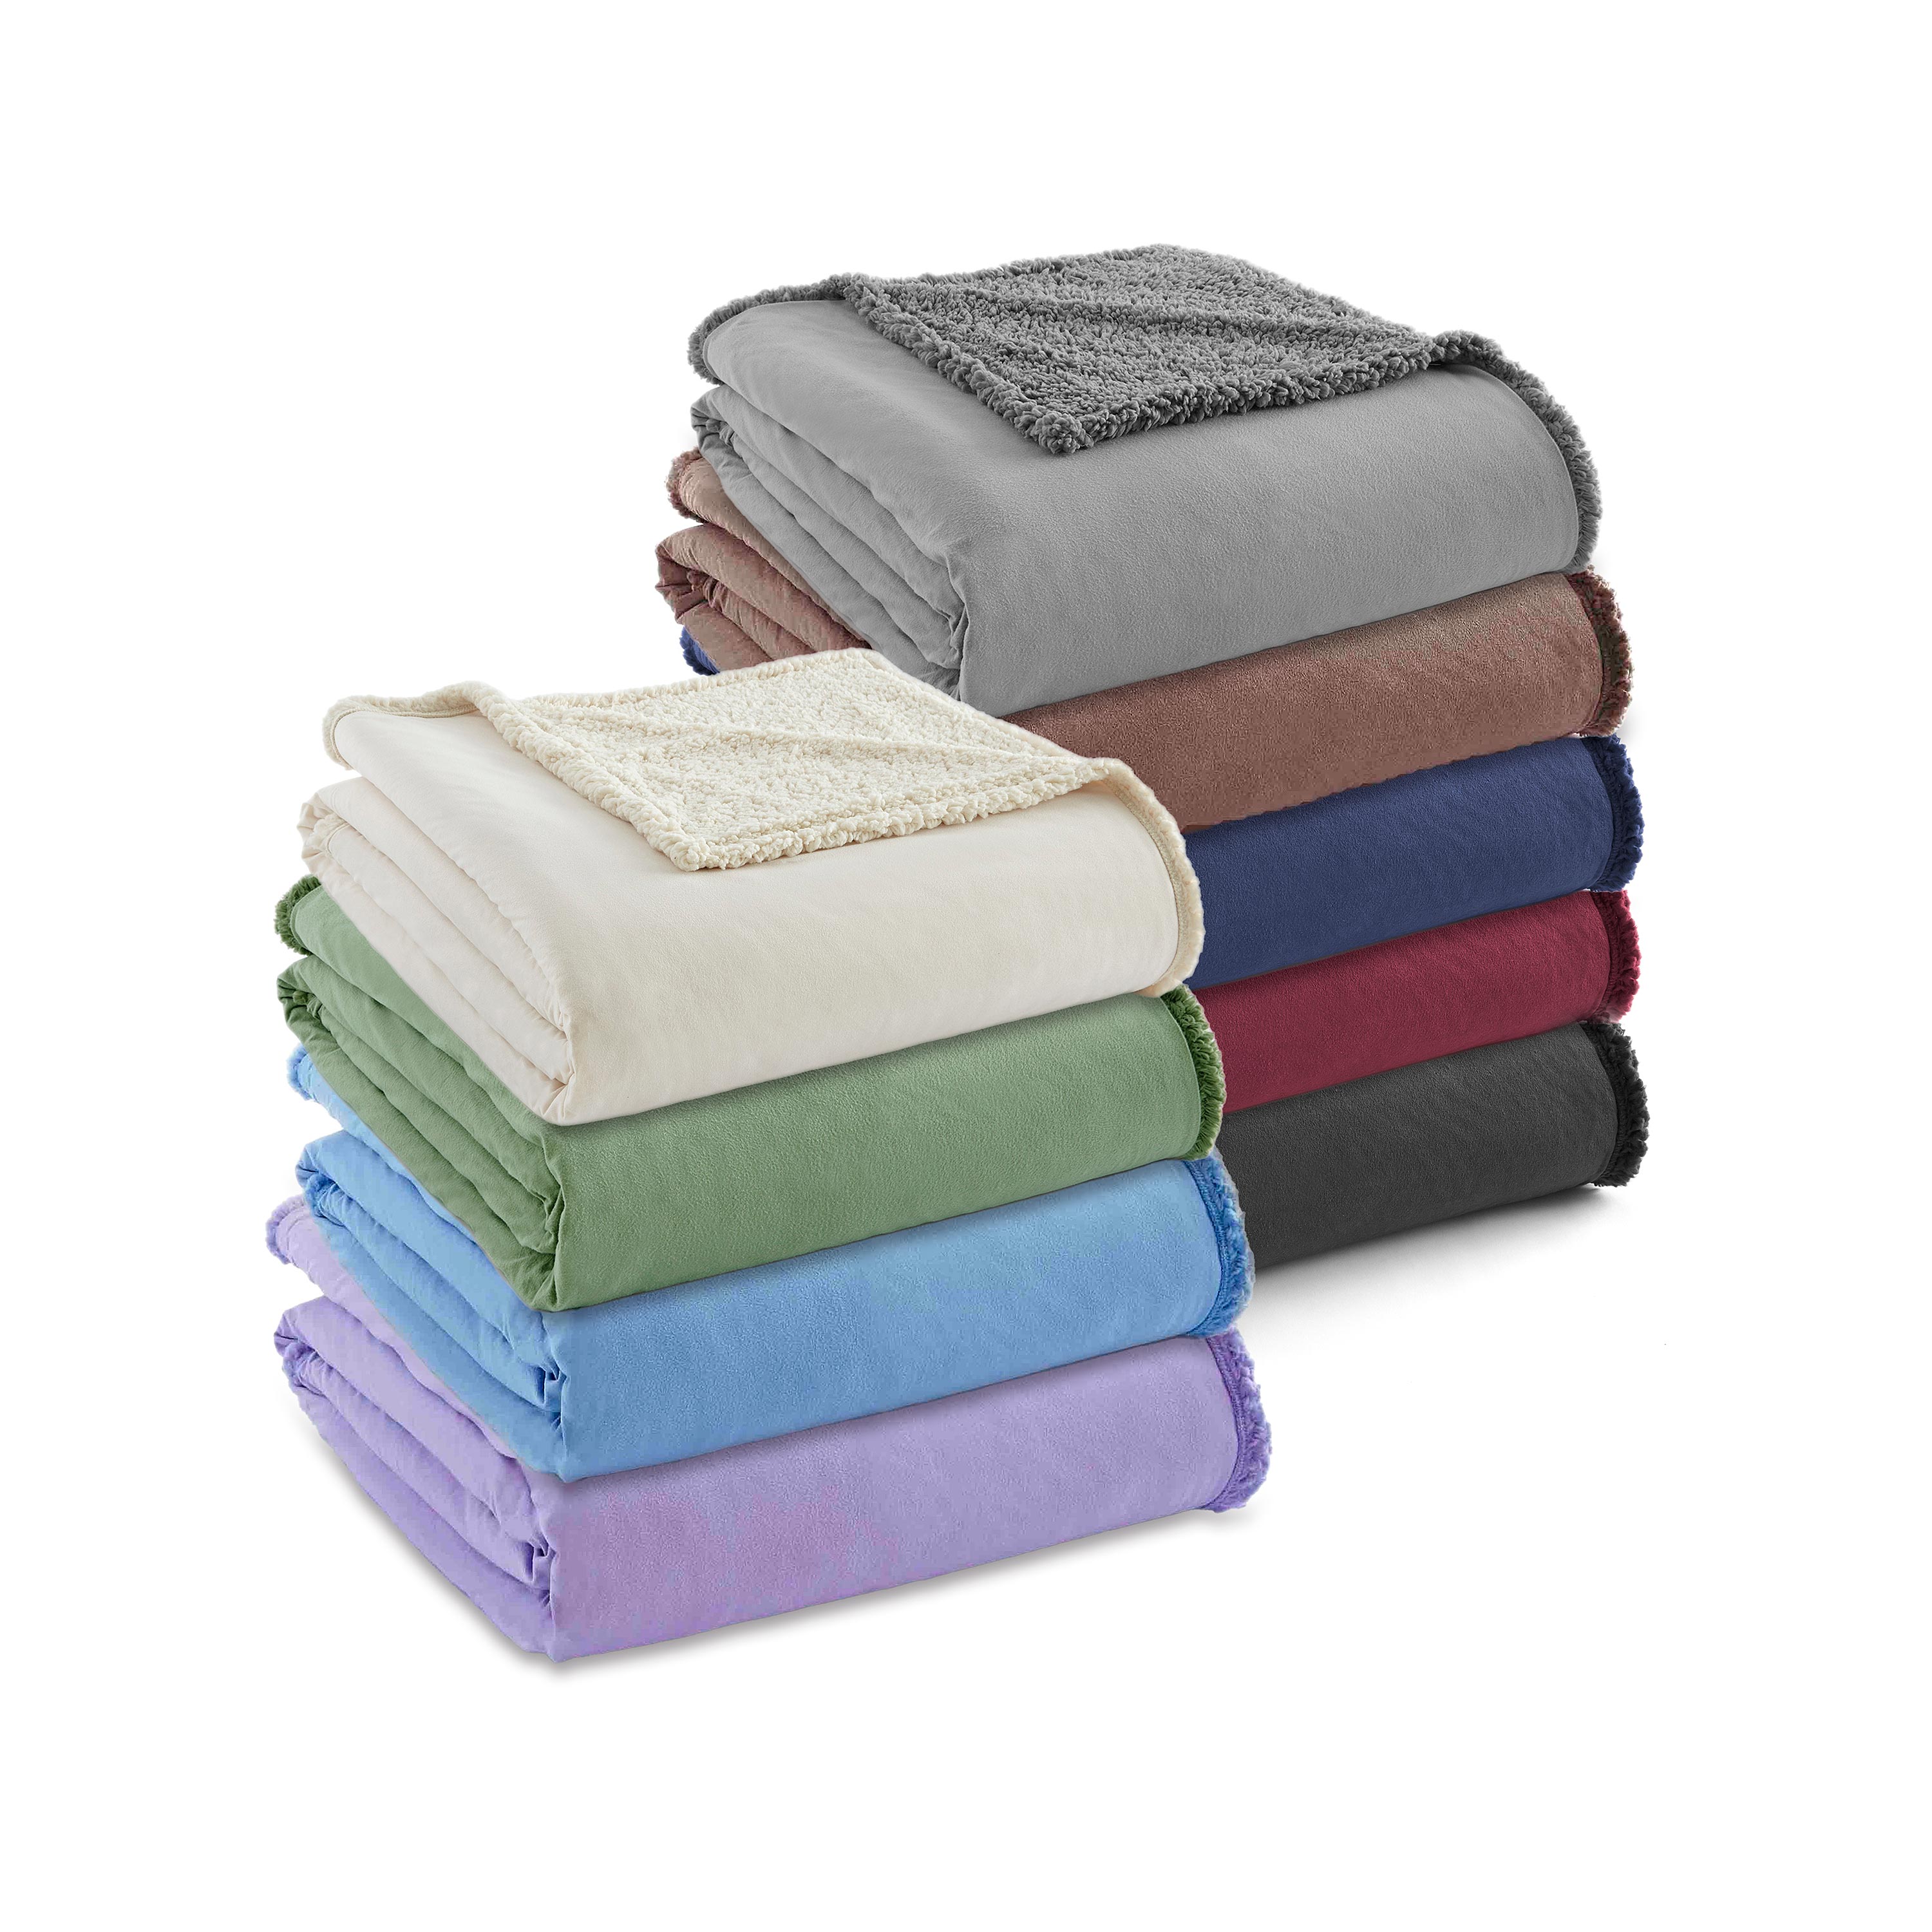 Reversible Solid Micro Flannel® Sherpa Blanket